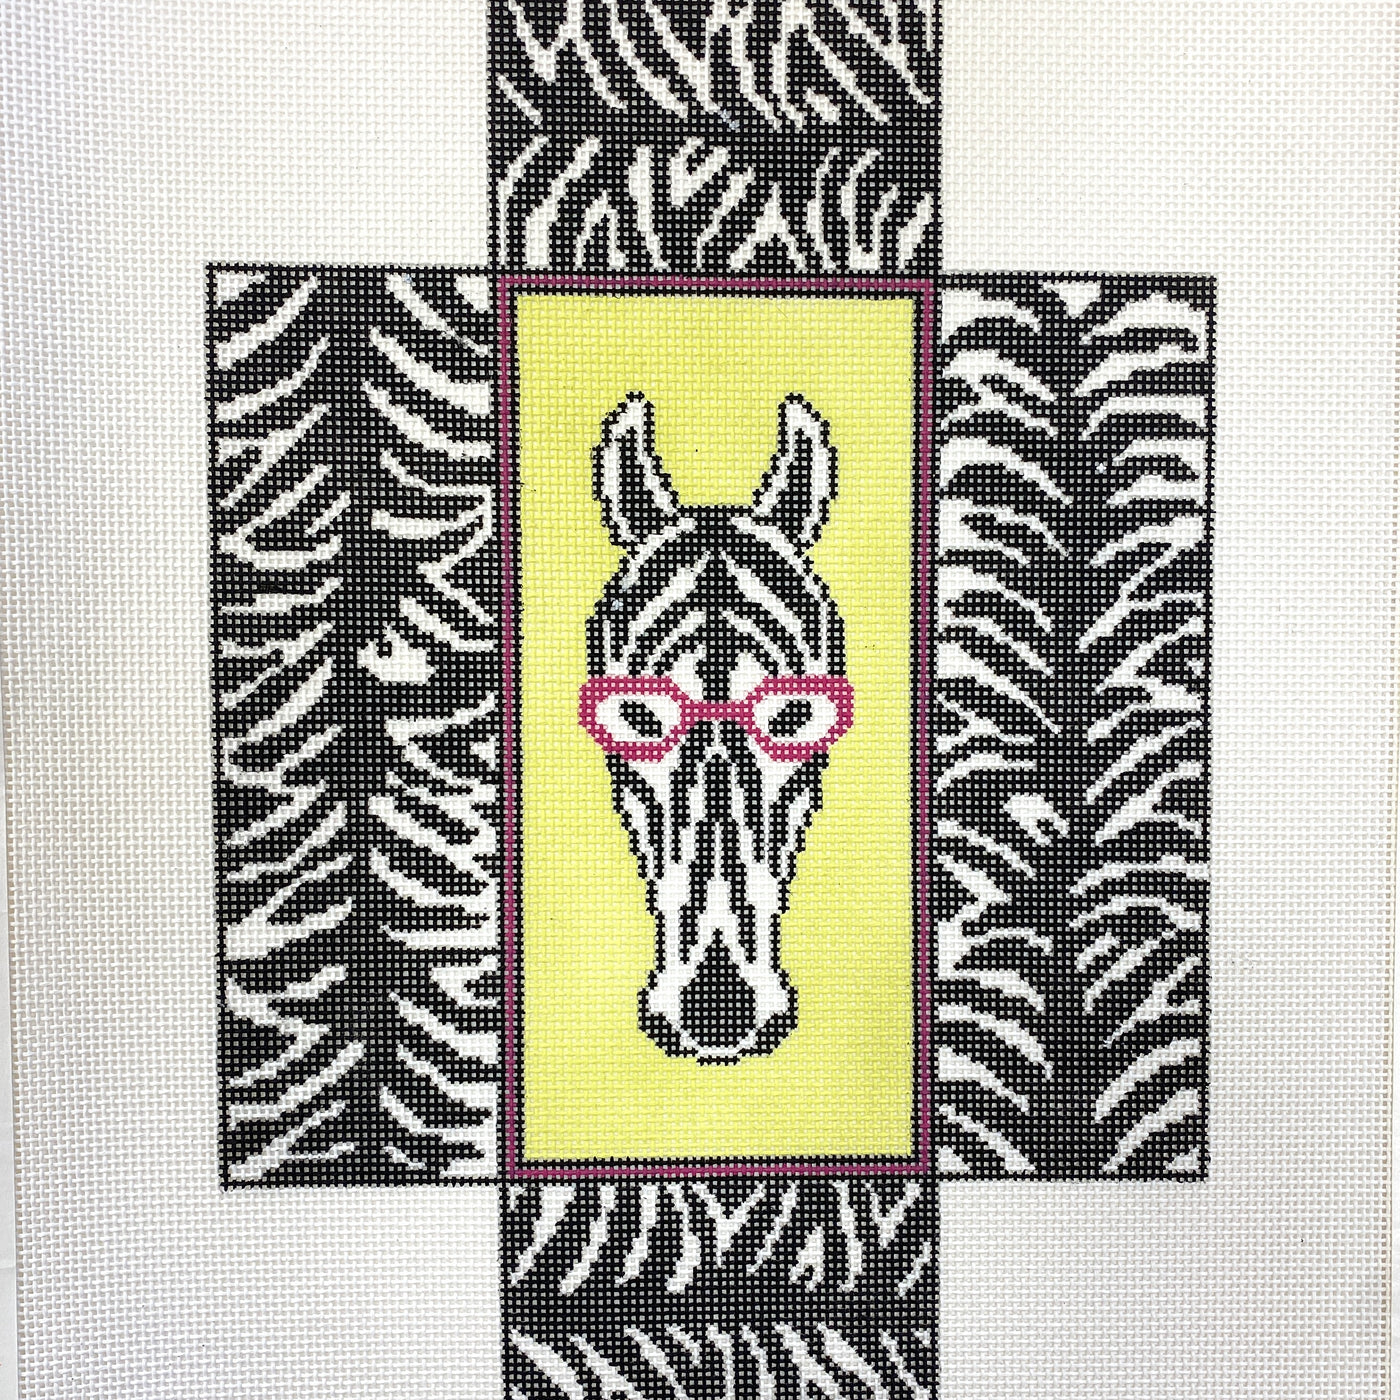 Zebra Brick Cover Needlepoint Canvas